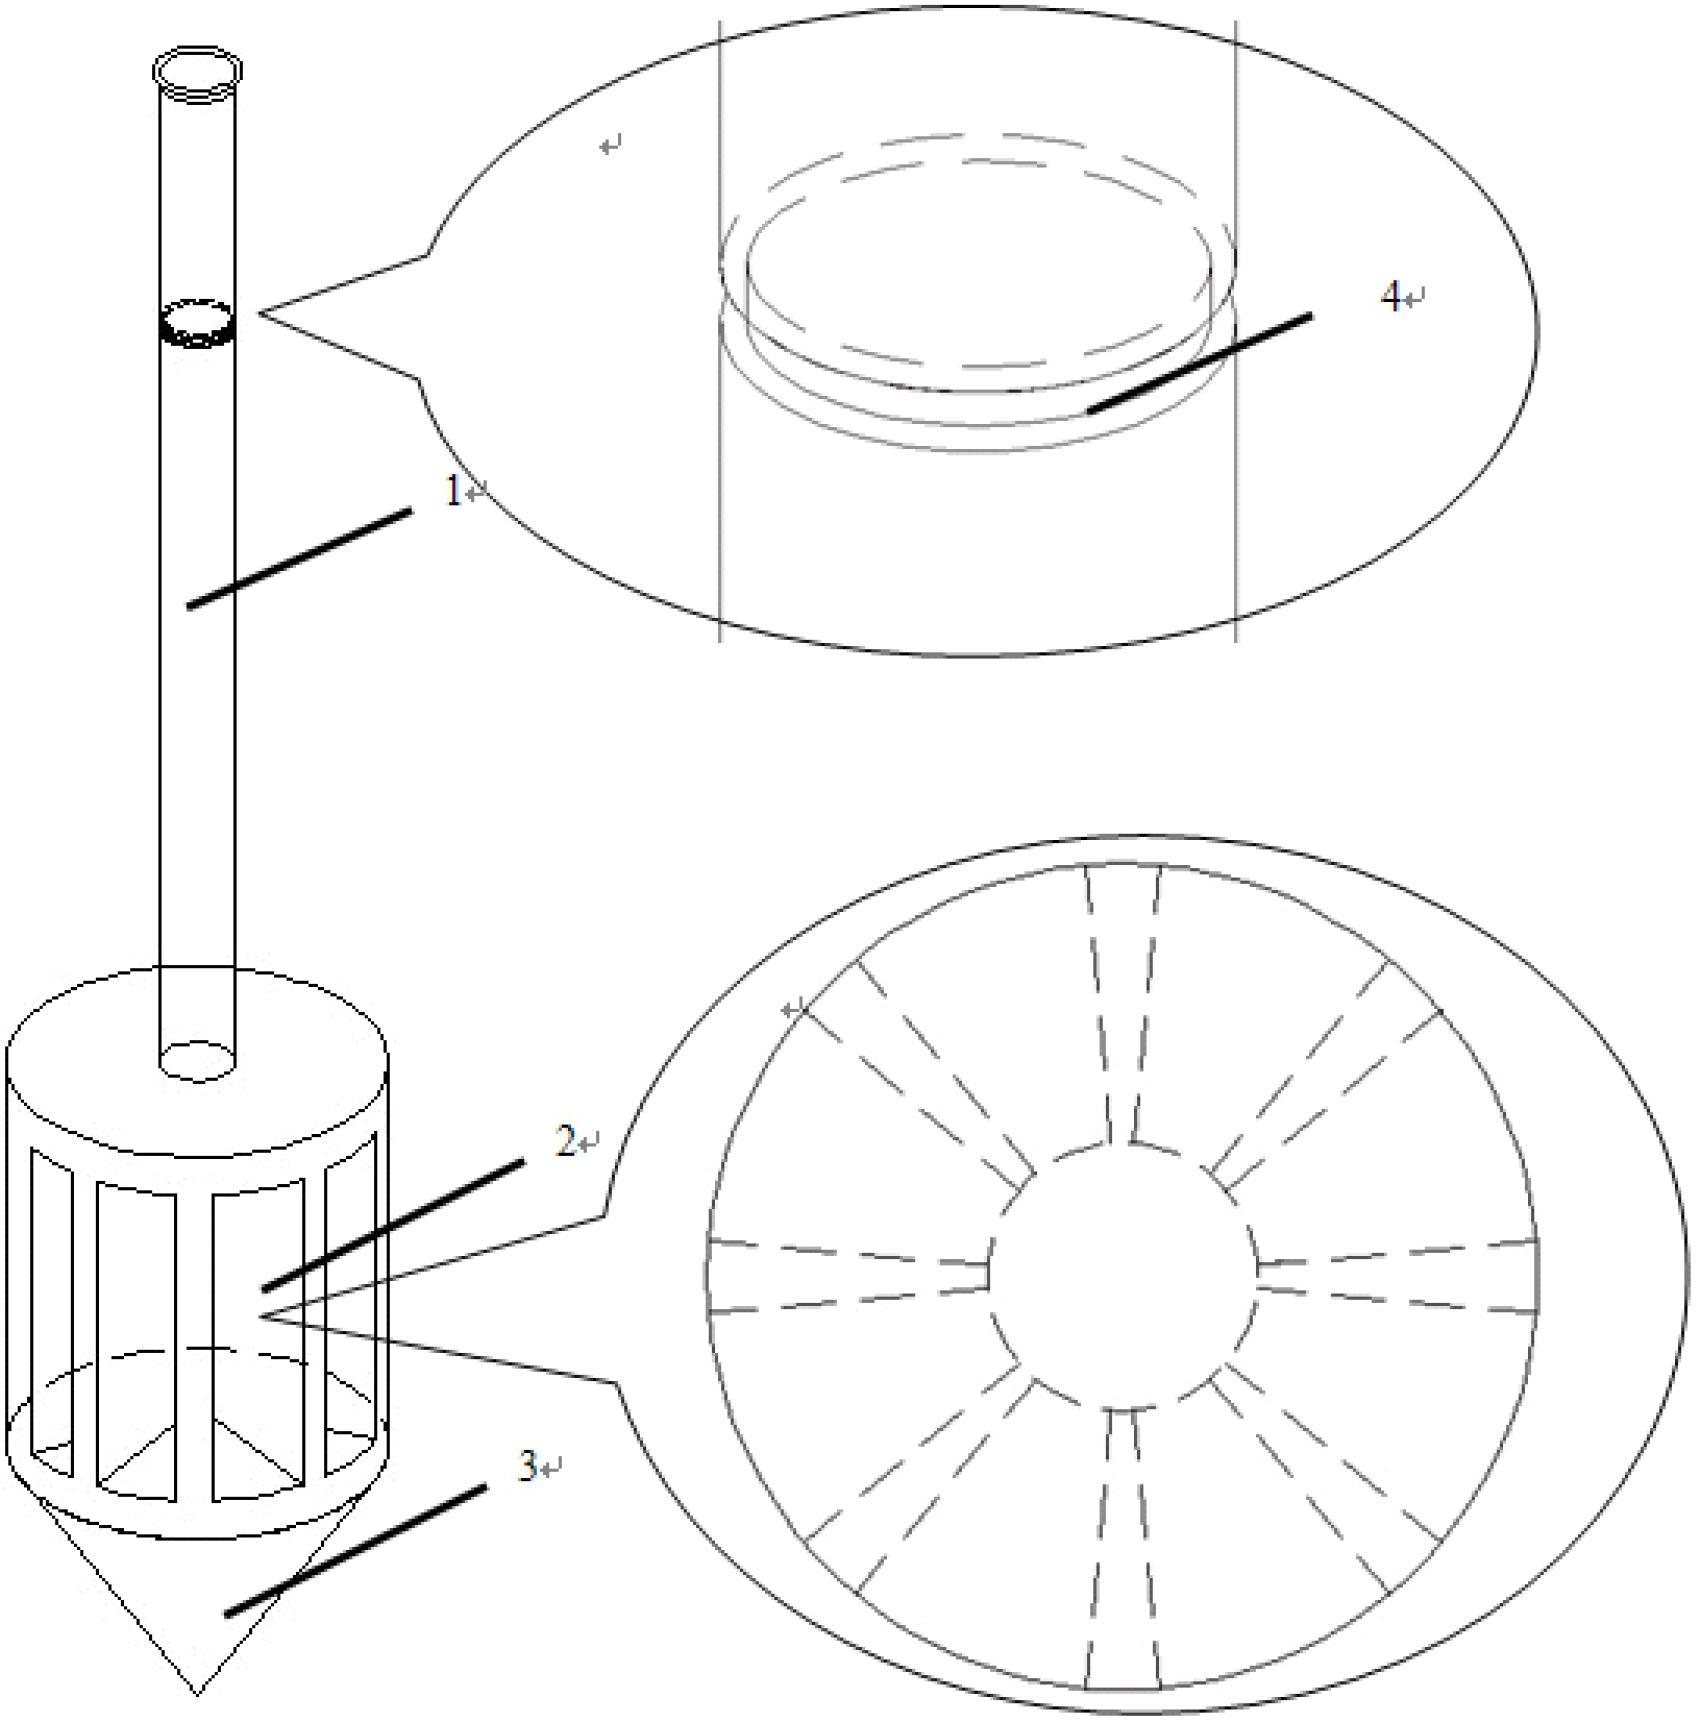 Multi-depth rotating-wheel closed sampler and method thereof